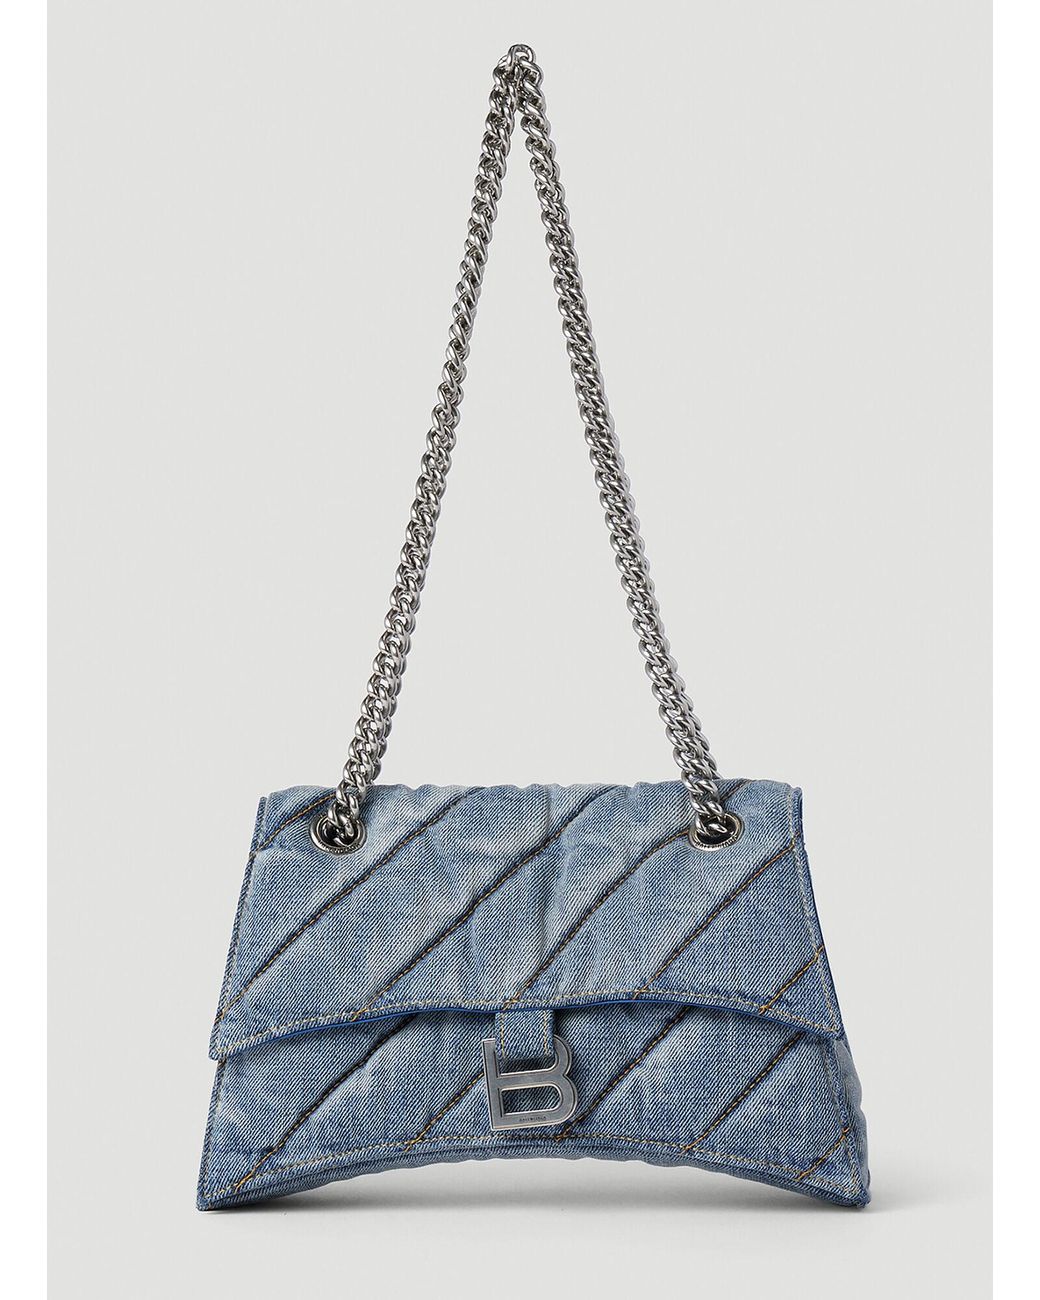 Balenciaga Denim Crush Quilted Shoulder Bag in Blue | Lyst